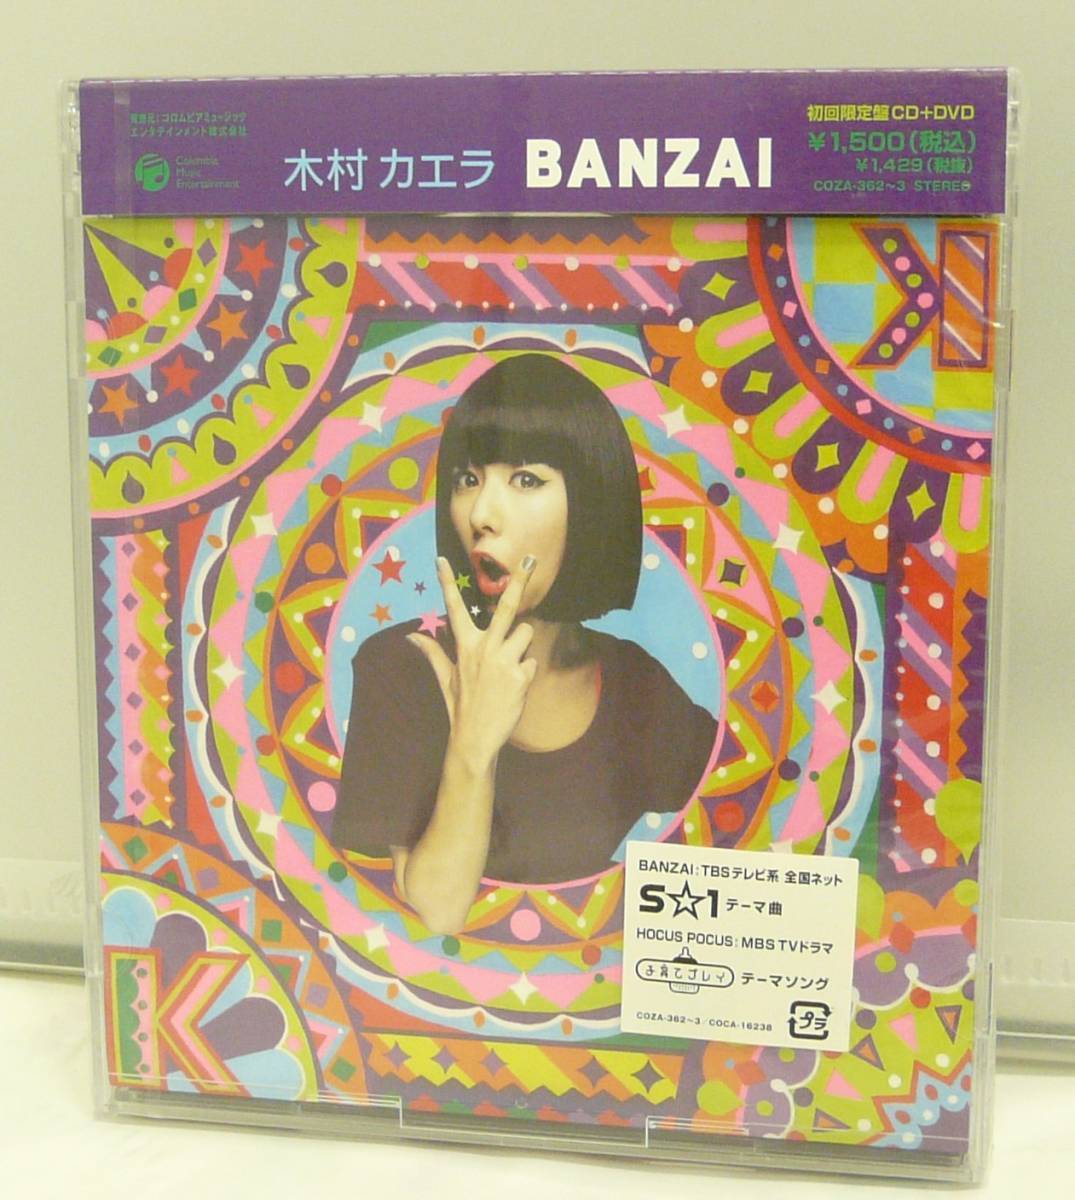 CD 非売品 未開封 木村カエラ COZA362 CD+DVD 管理CD1648 BANZAI 数量限定 正規店仕入れの